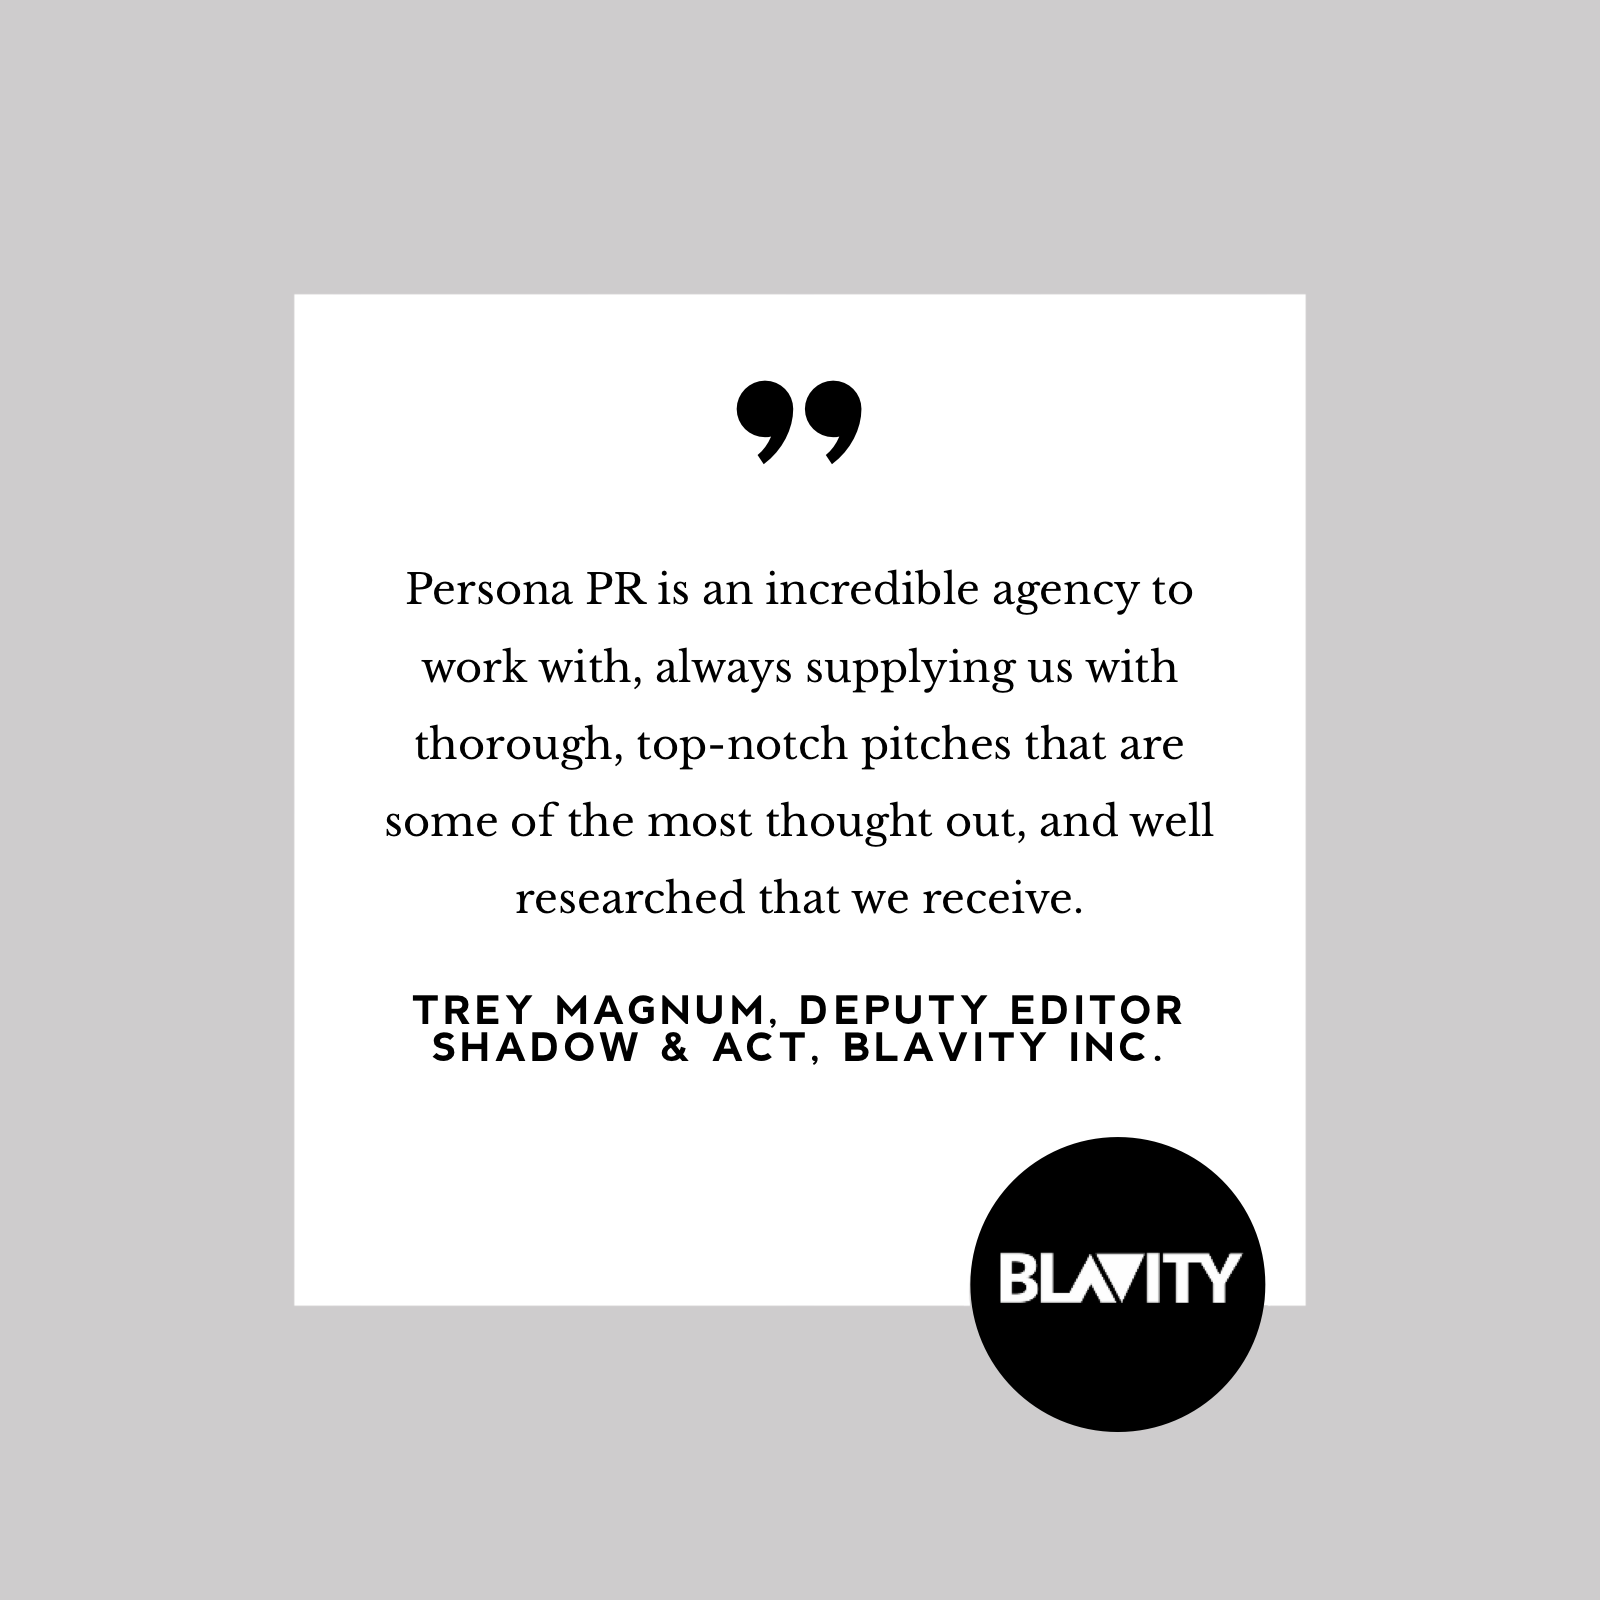 Testimonial from Trey Magnum, Deputy Editor, Shadow & Act, Blavity Inc.